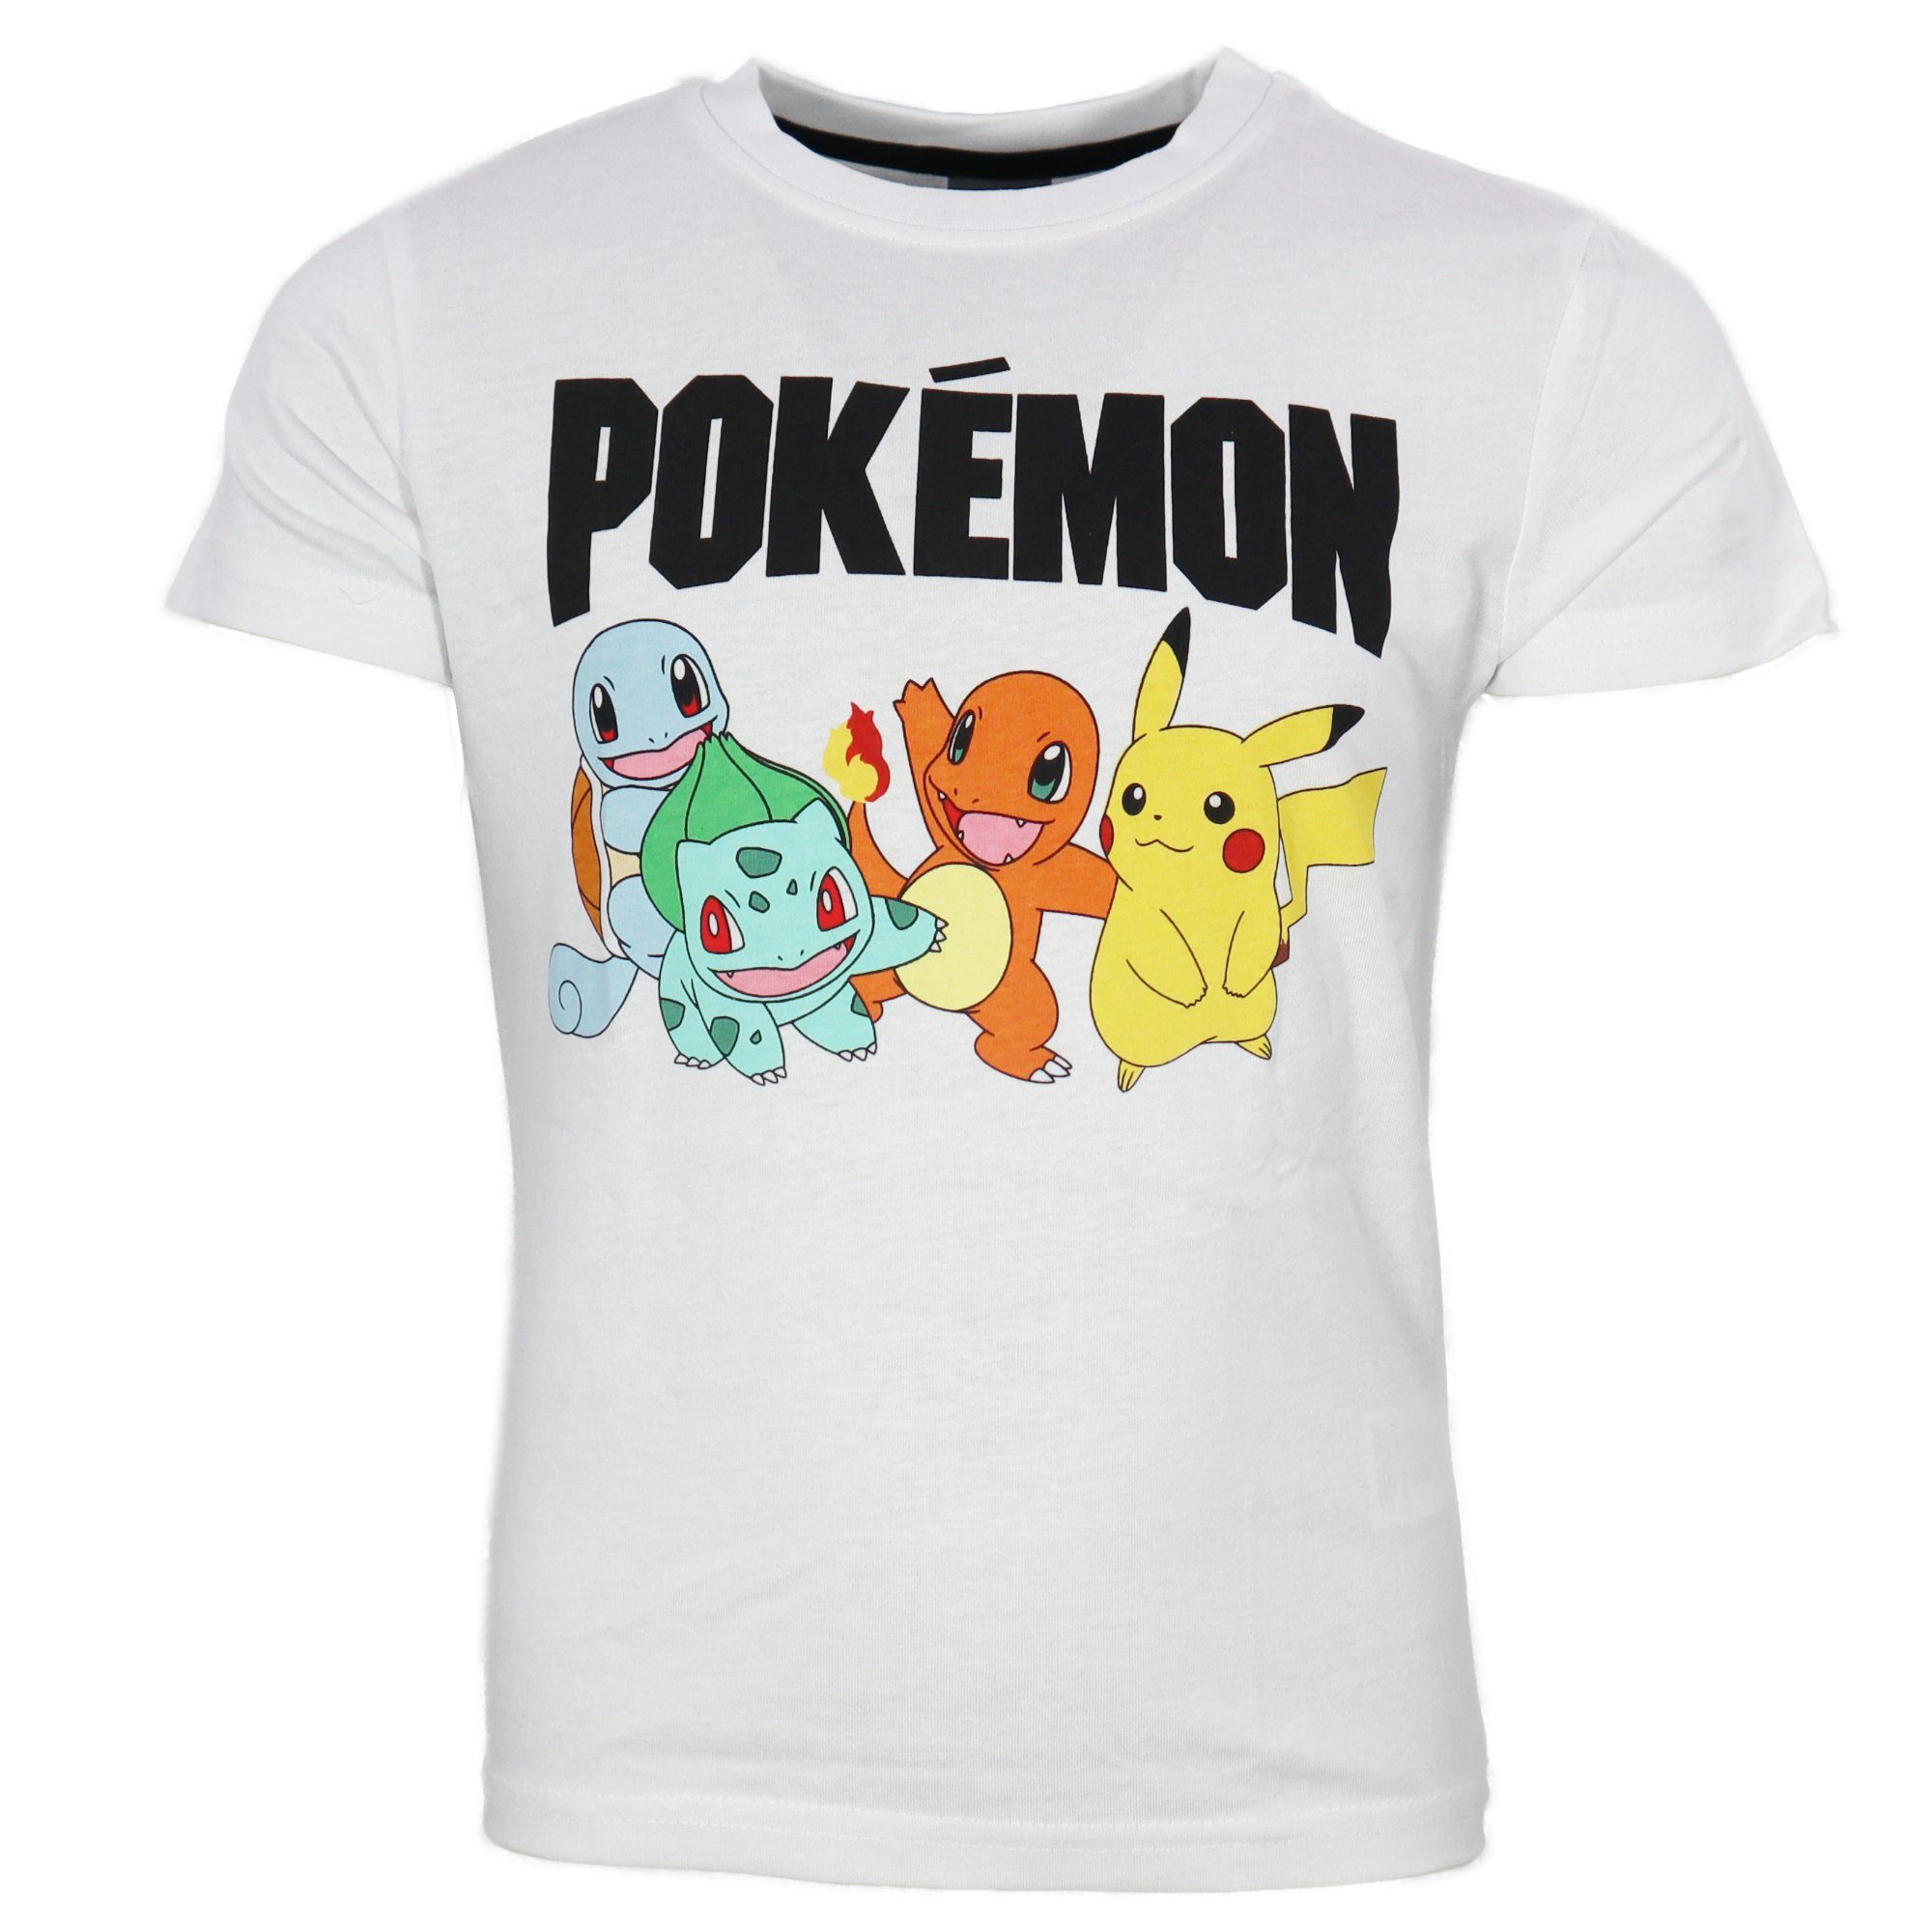 POKÉMON Print-Shirt Pokemon Pikachu and Friends Kinder T-Shirt Kurzarm Shirt Gr. 110 bis 152, 100% Baumwolle Weiß